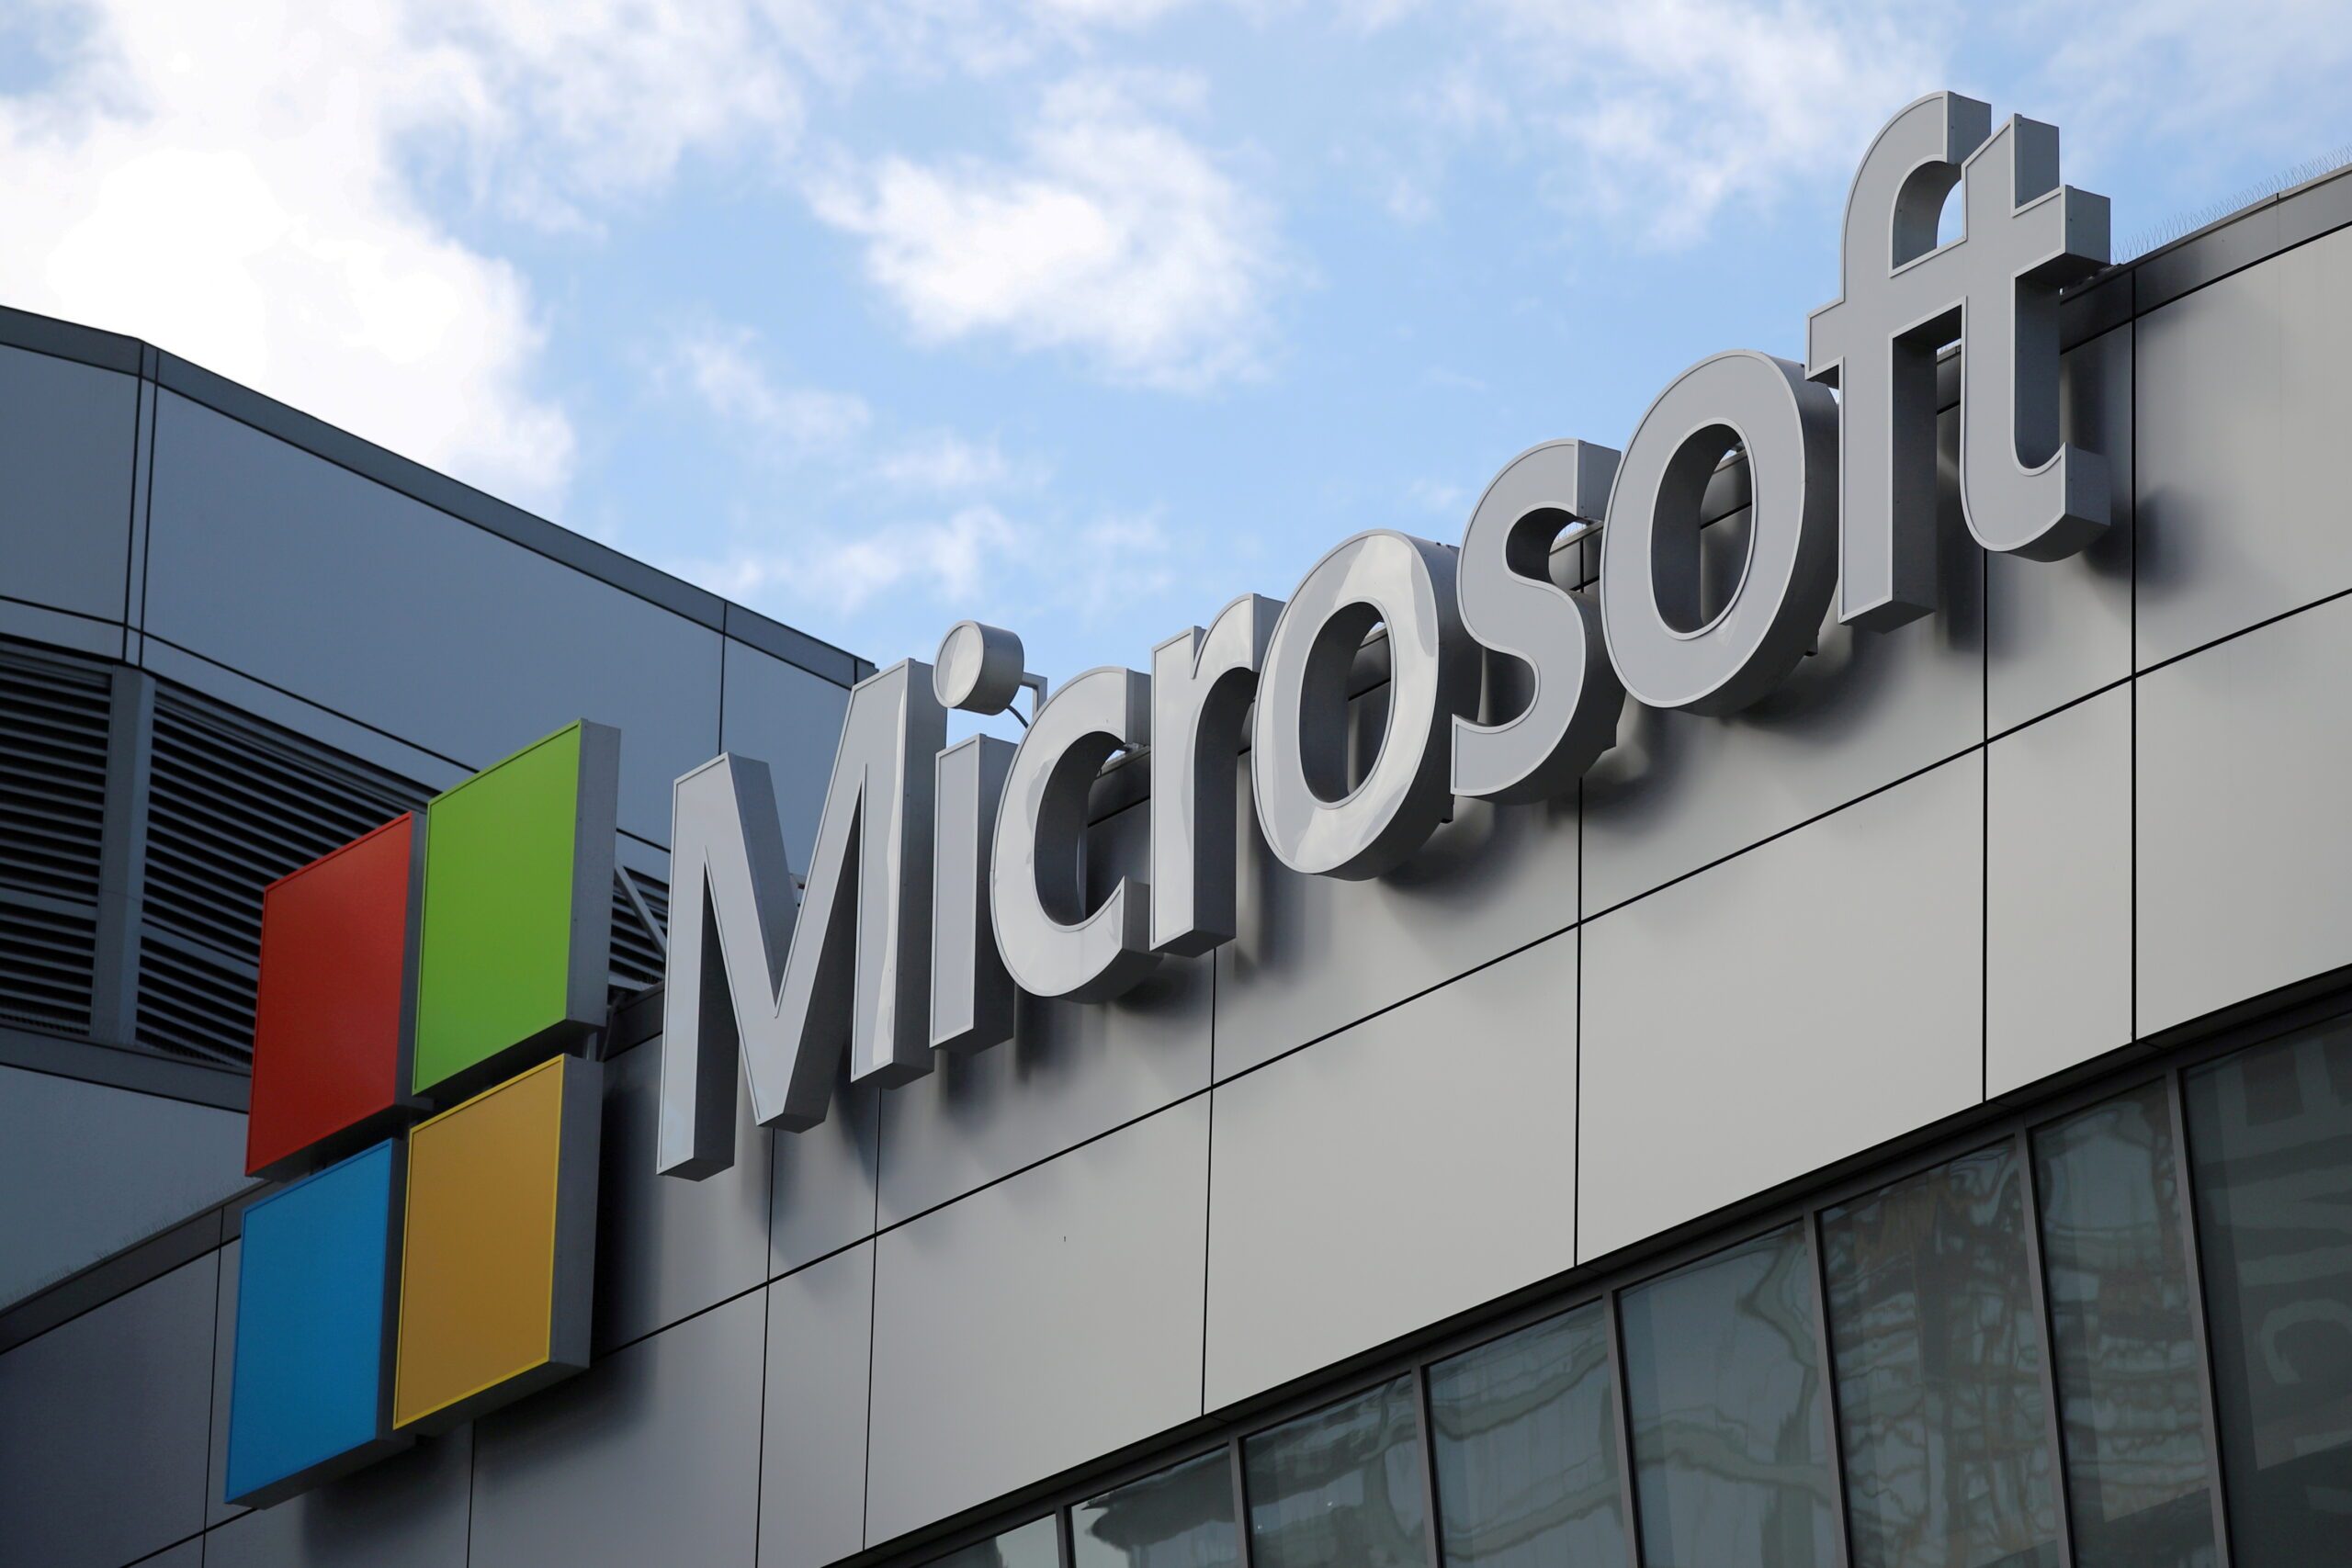 Microsoft’s cloud business targeted by EU antitrust regulators